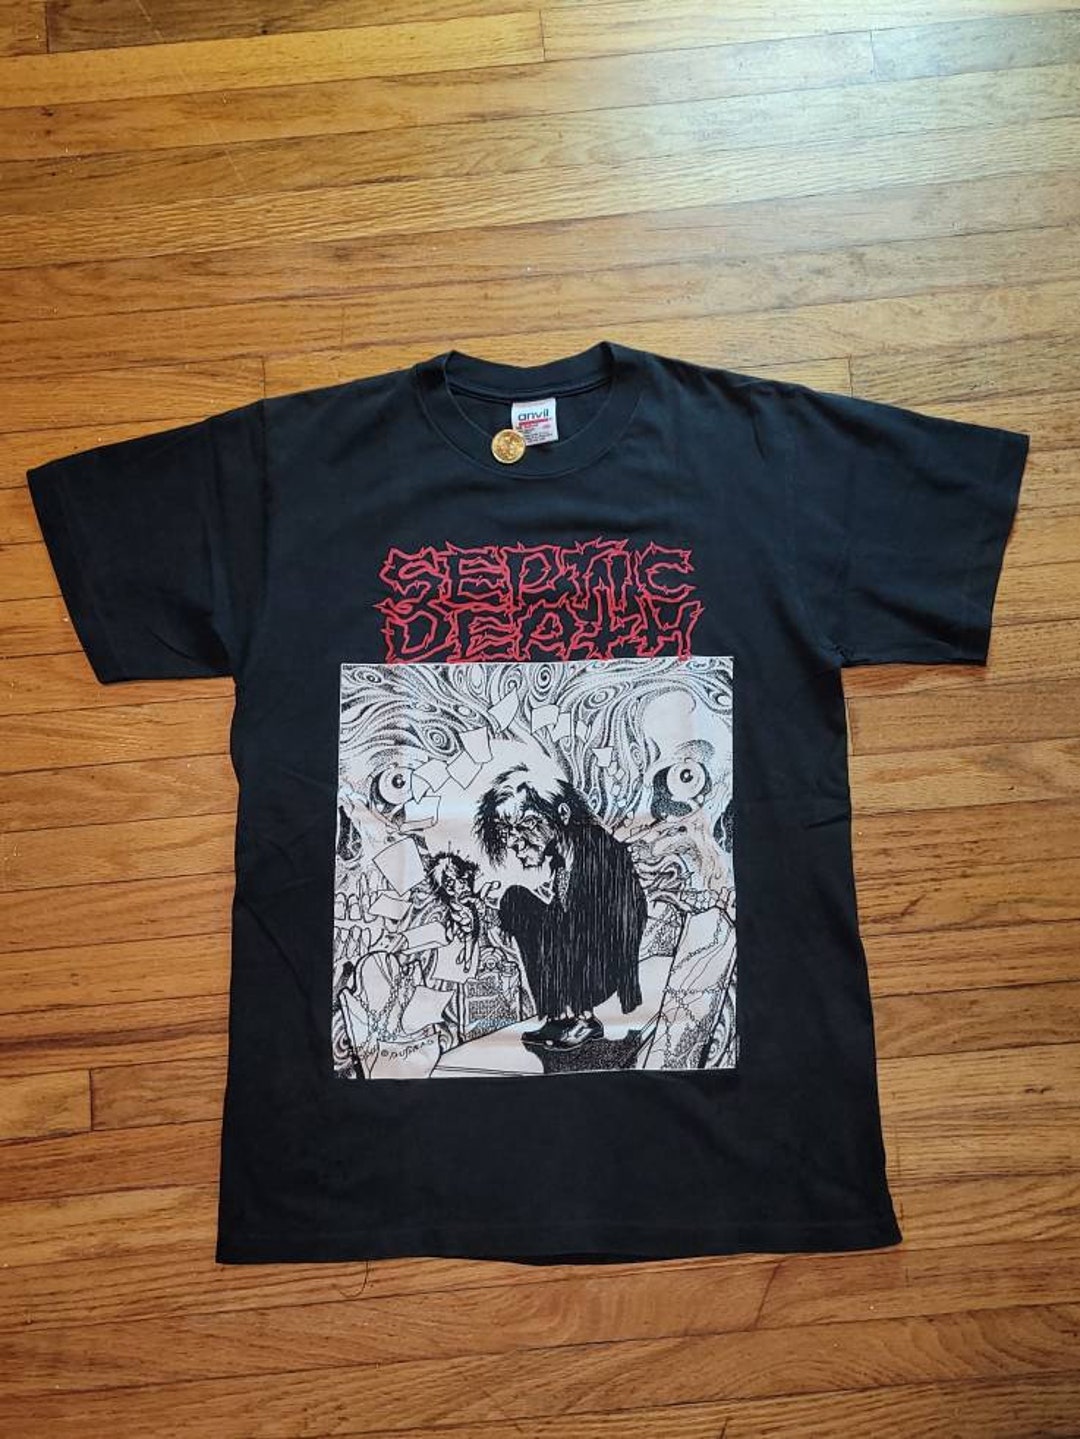 Vintage 90s Pushead Septic Death Burial Mai so Tee Shirt Size - Etsy